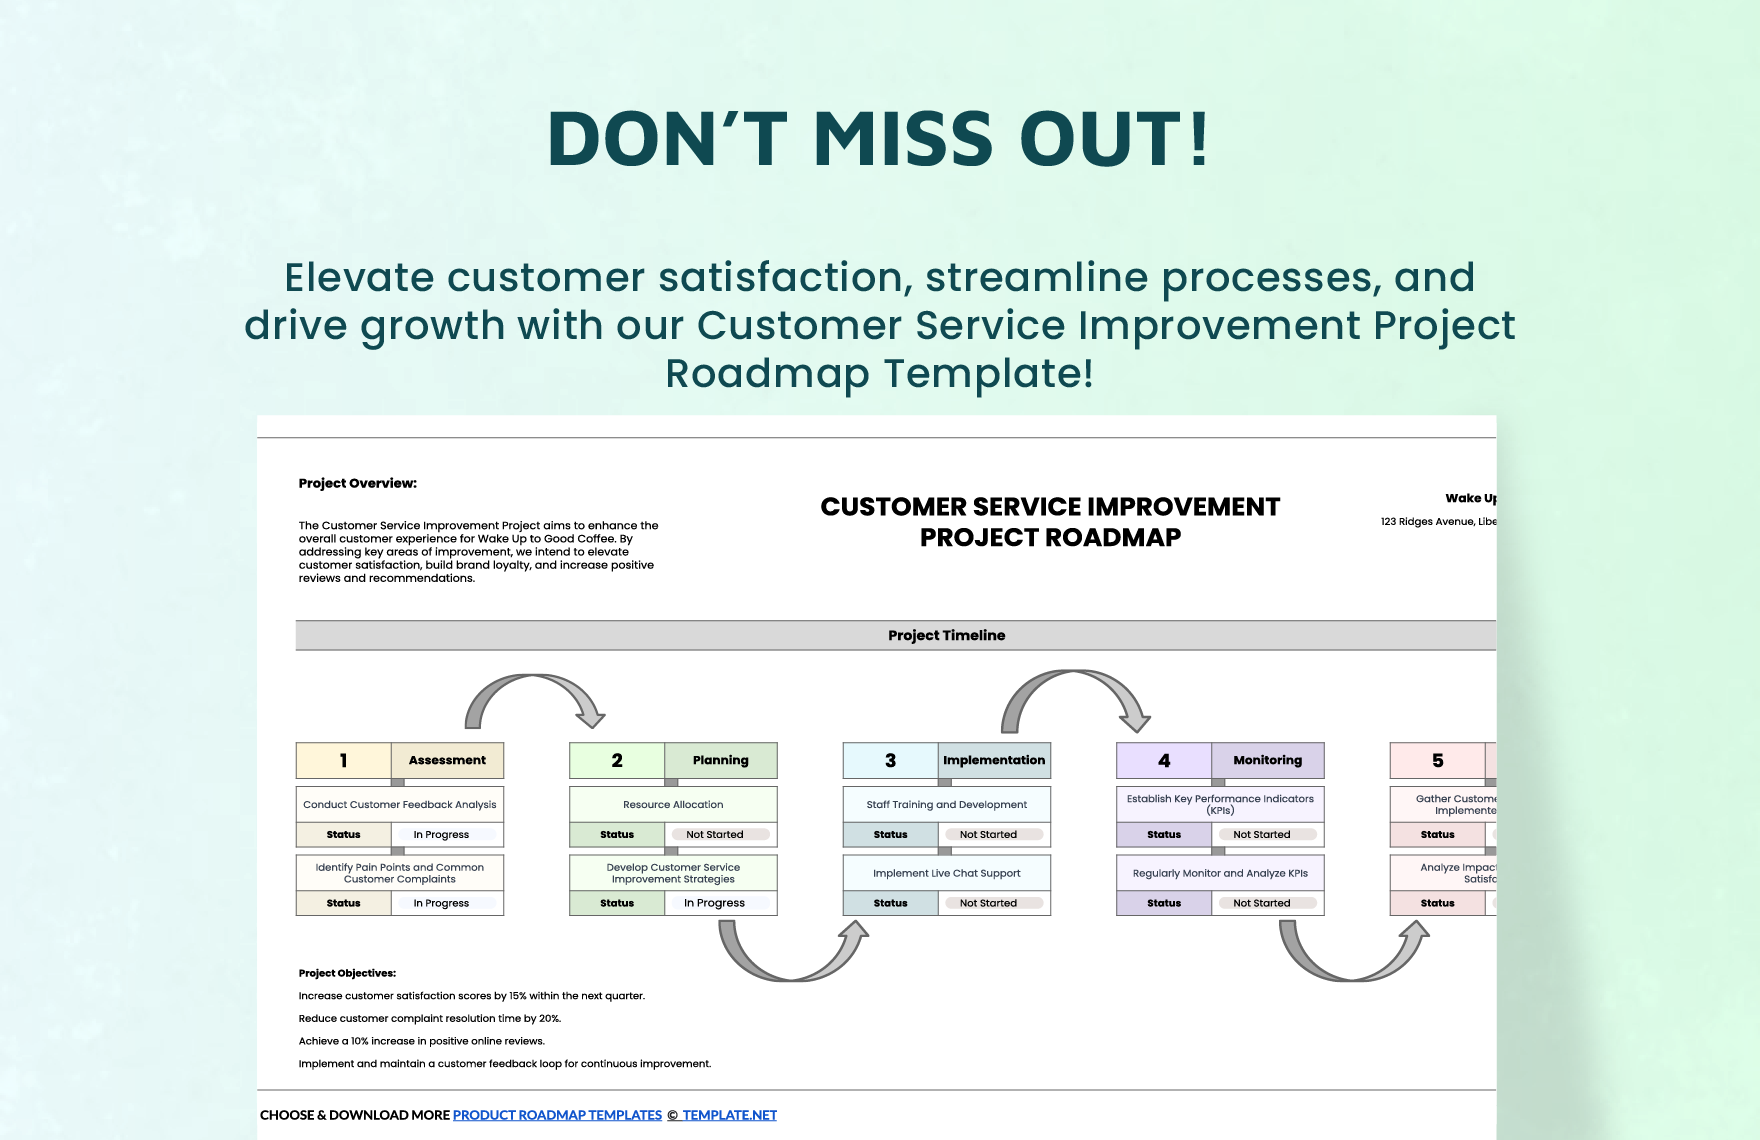 Customer Service Improvement Project Roadmap Template